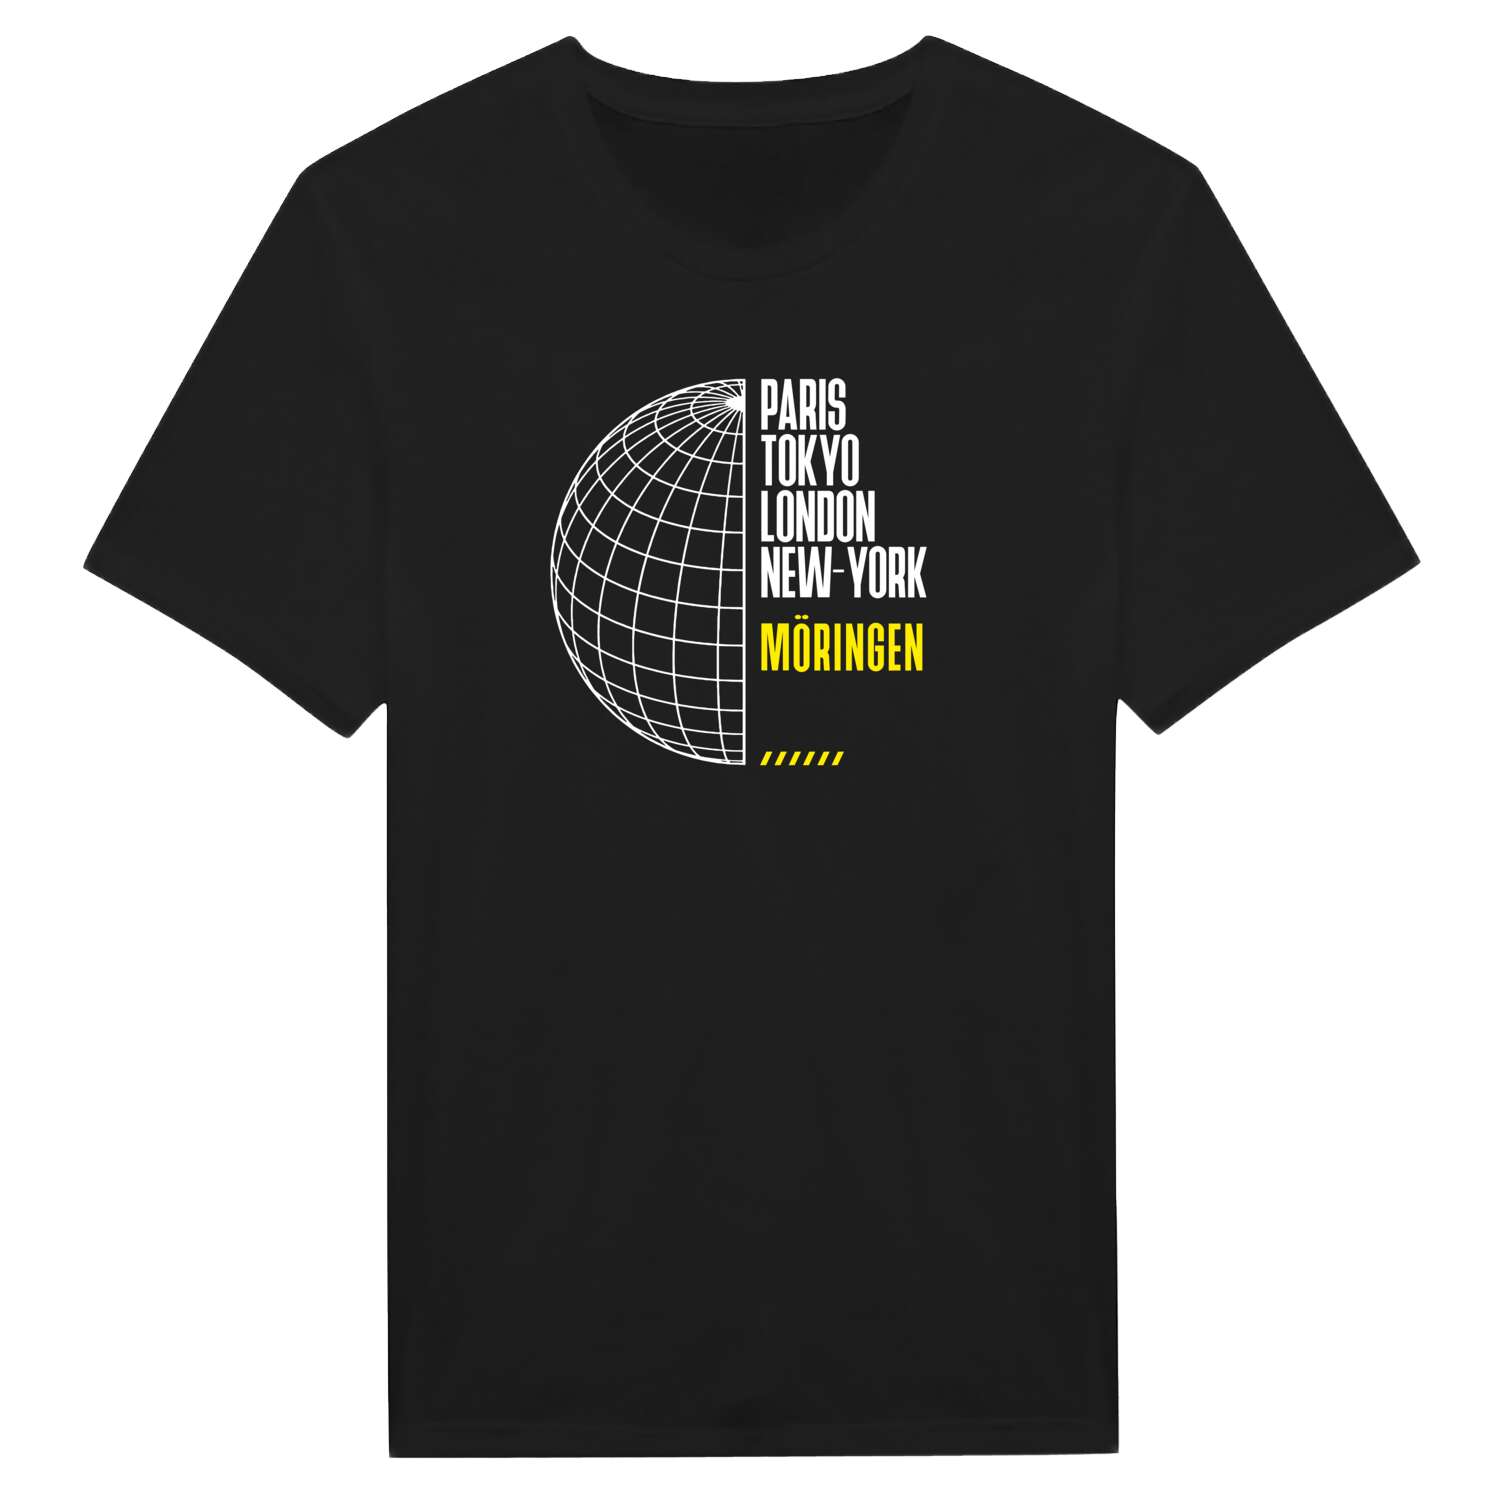 Möringen T-Shirt »Paris Tokyo London«